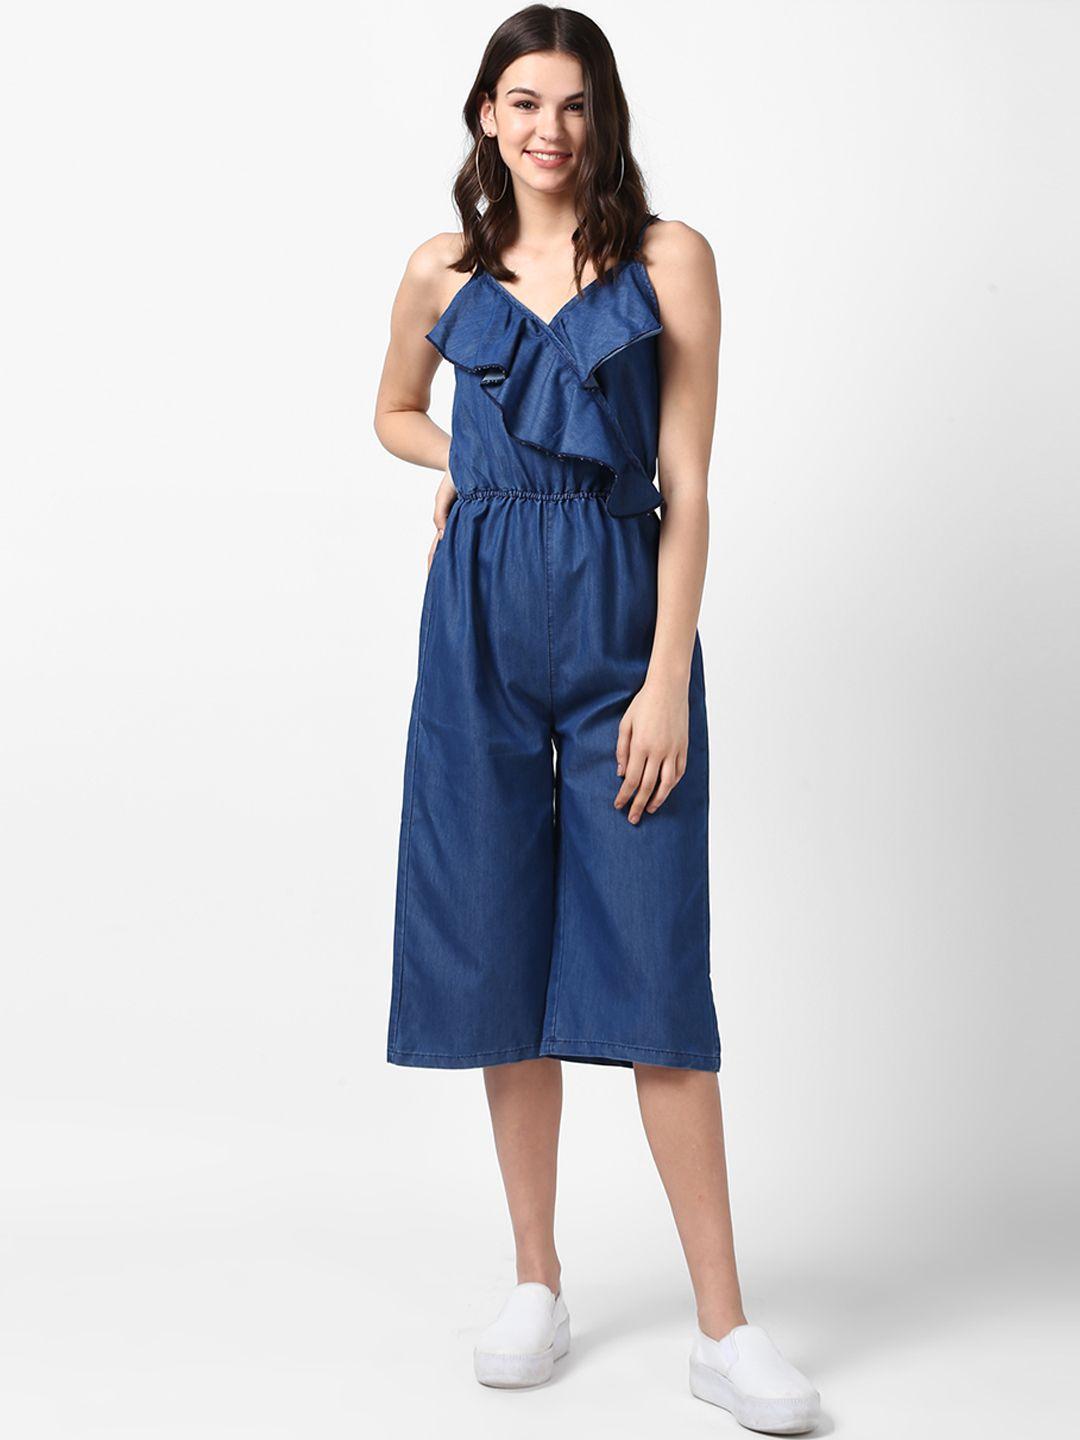 stylestone blue solid capri jumpsuit